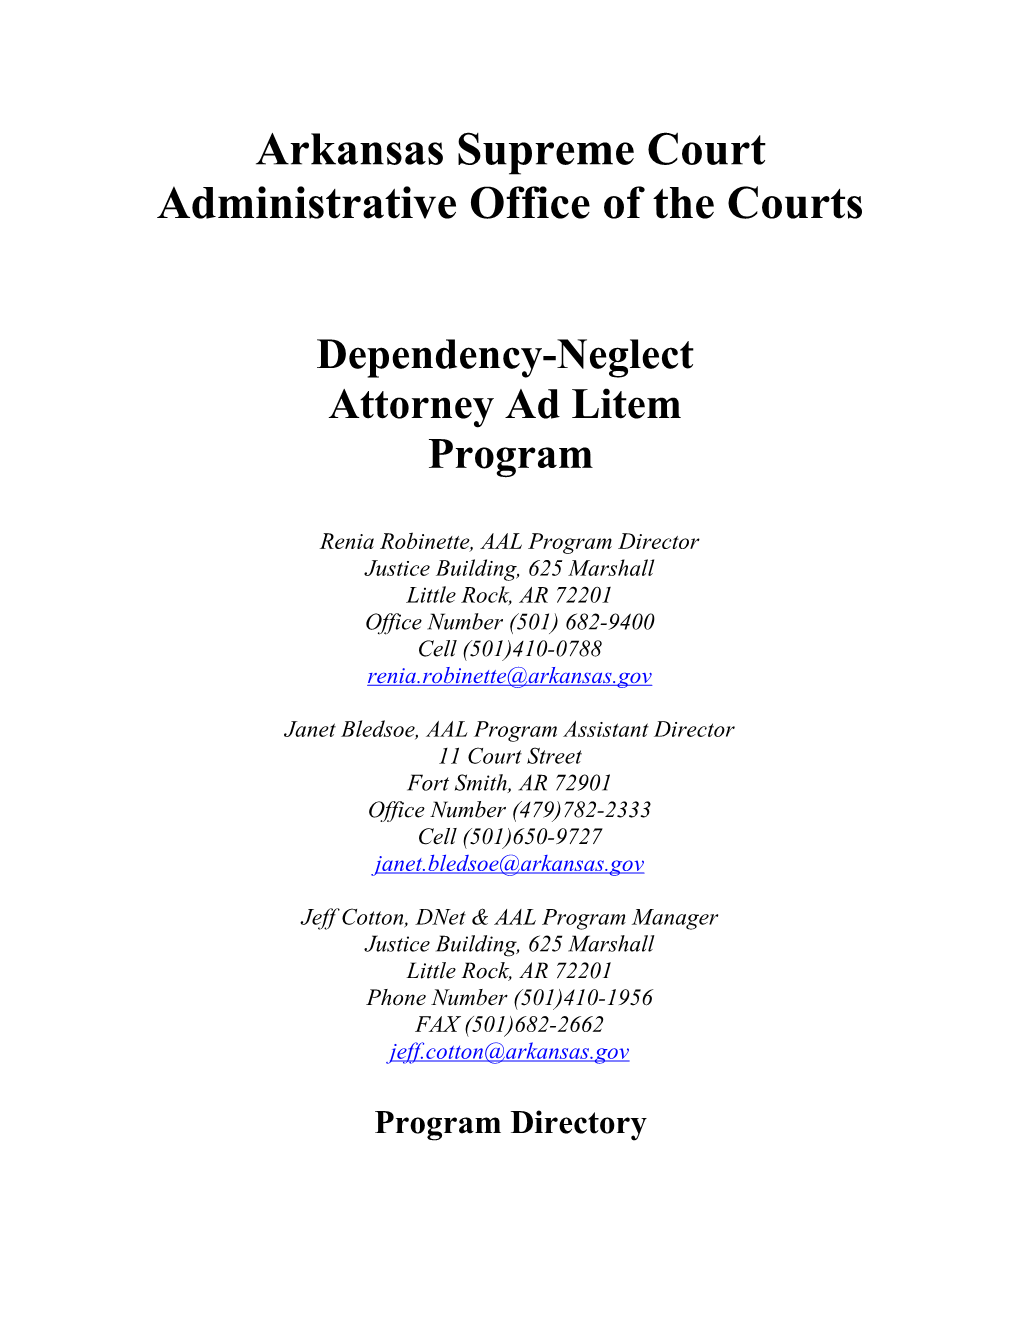 Dependency-Neglect Attorney Ad Litem Program